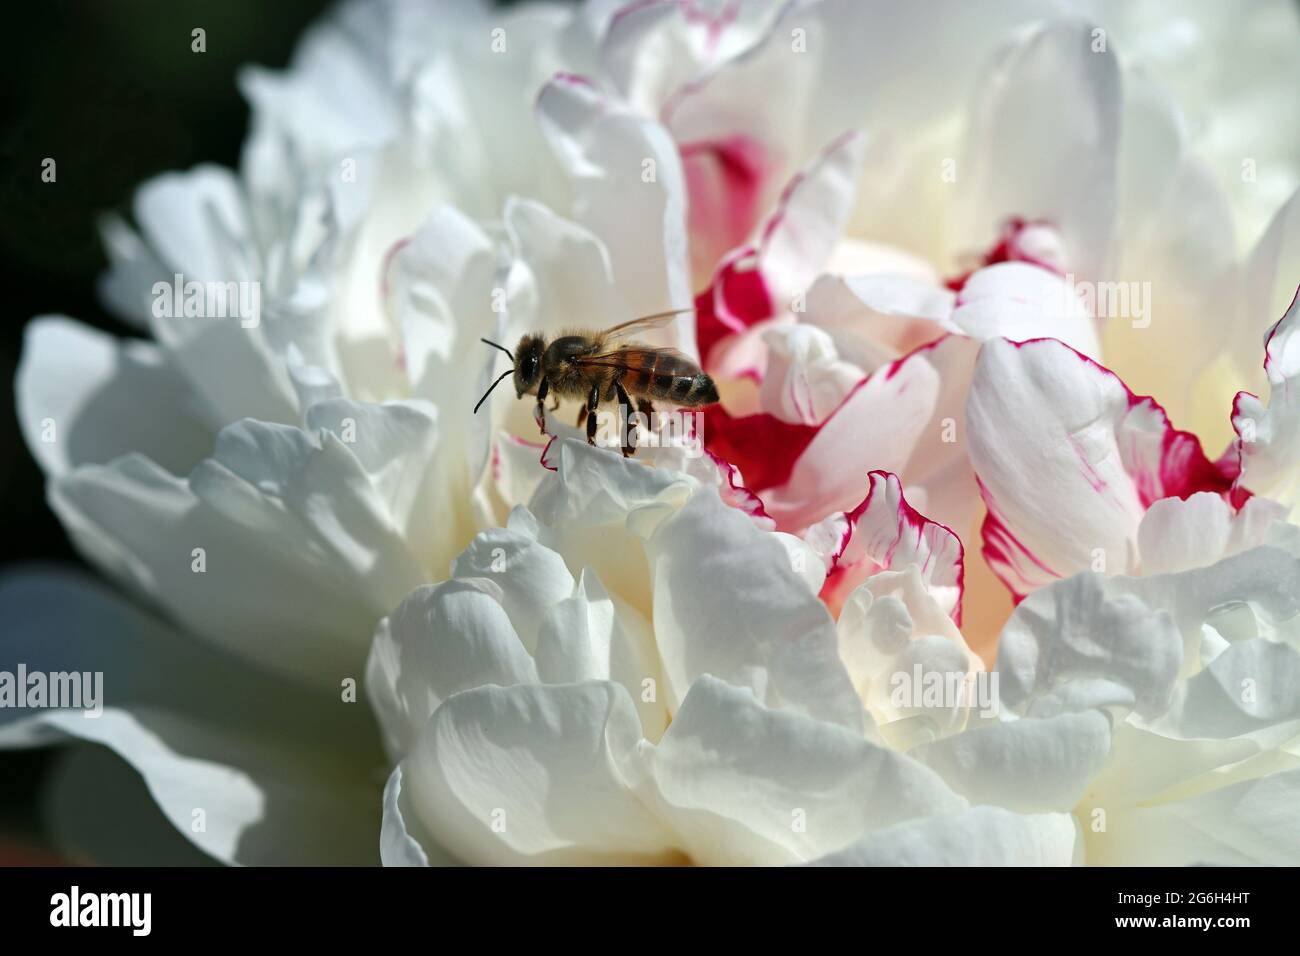 A honey bee walks along the ruffled, layered edges of the double bloom of a Paeonia (peony) Lactiflora (milk white flowers) 'Festiva Maxima' Stock Photo